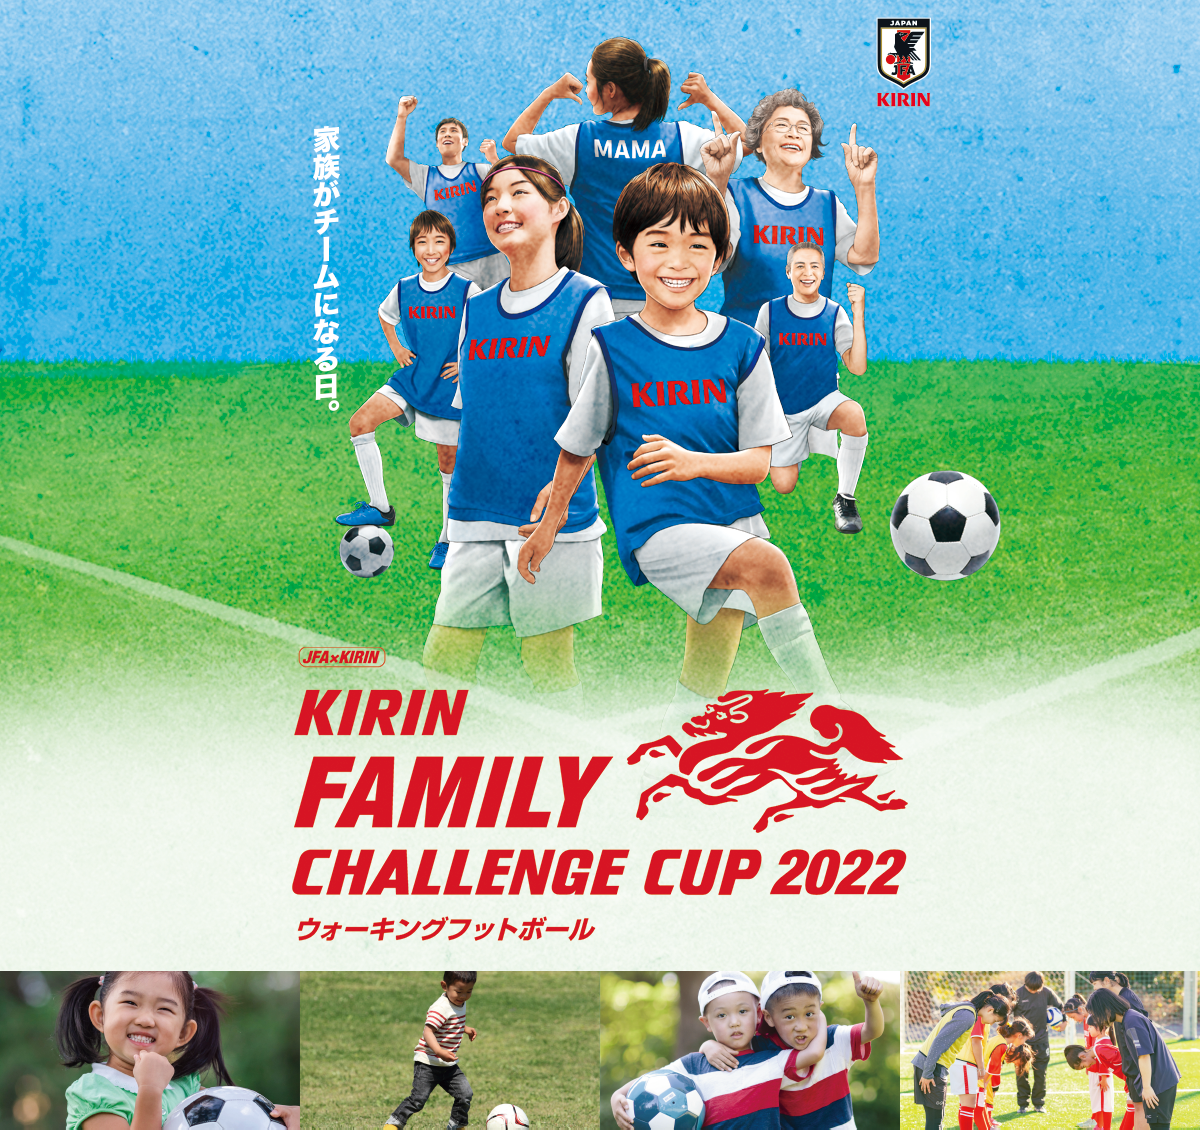 KIRIN 家族がチームになる日。 JFA×KIRIN KIRIN FAMILY CHALLENGE CUP 2022 ウォーキングフットボール